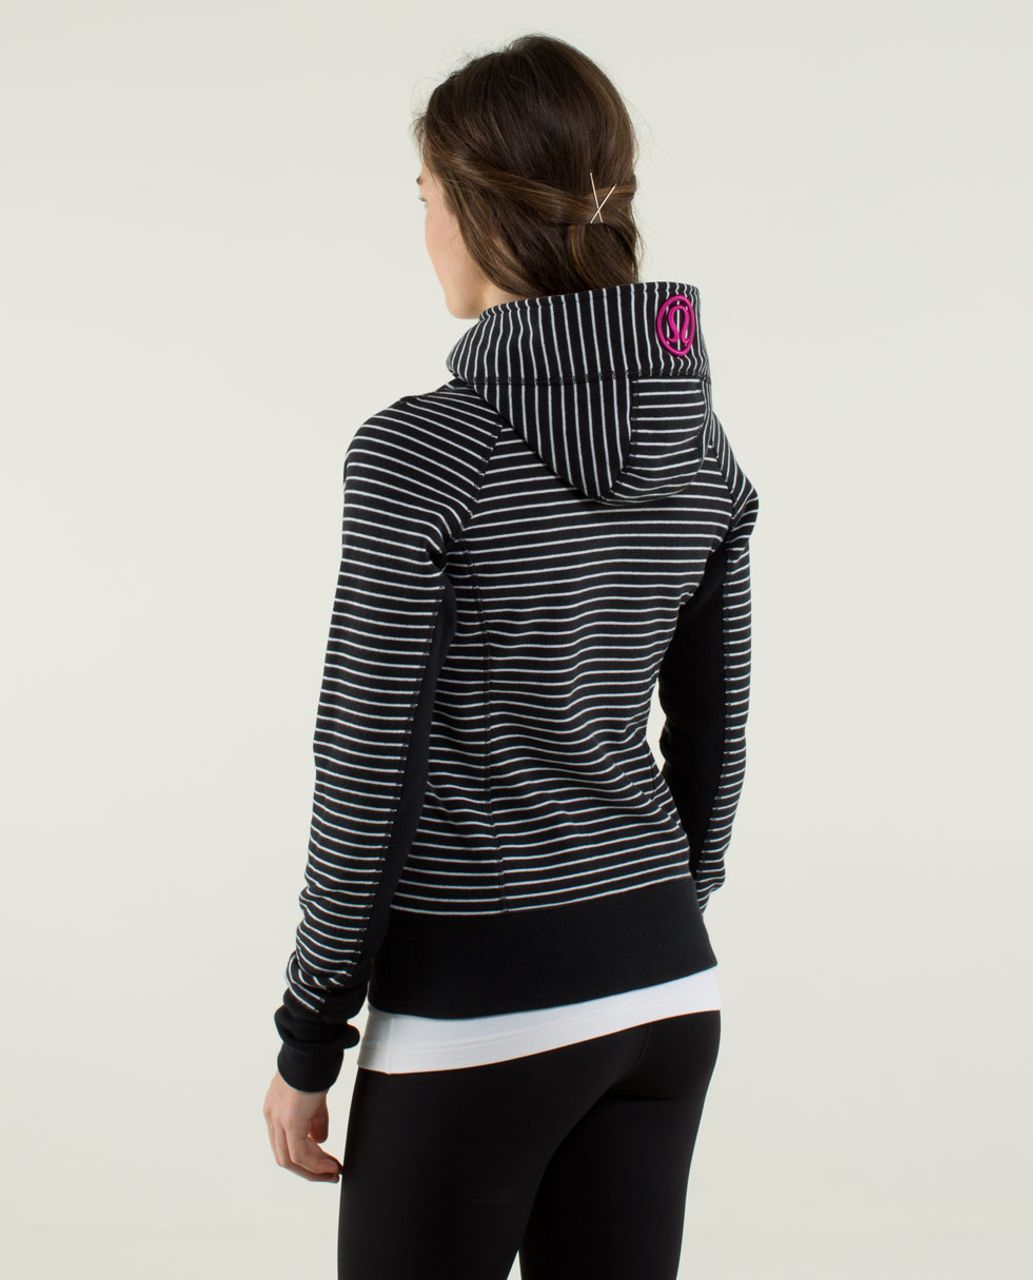 Lululemon Scuba Hoodie *Stretch (Lined Hood) - Parallel Stripe Black / White / Black / Brisk Bloom Black White / White / White